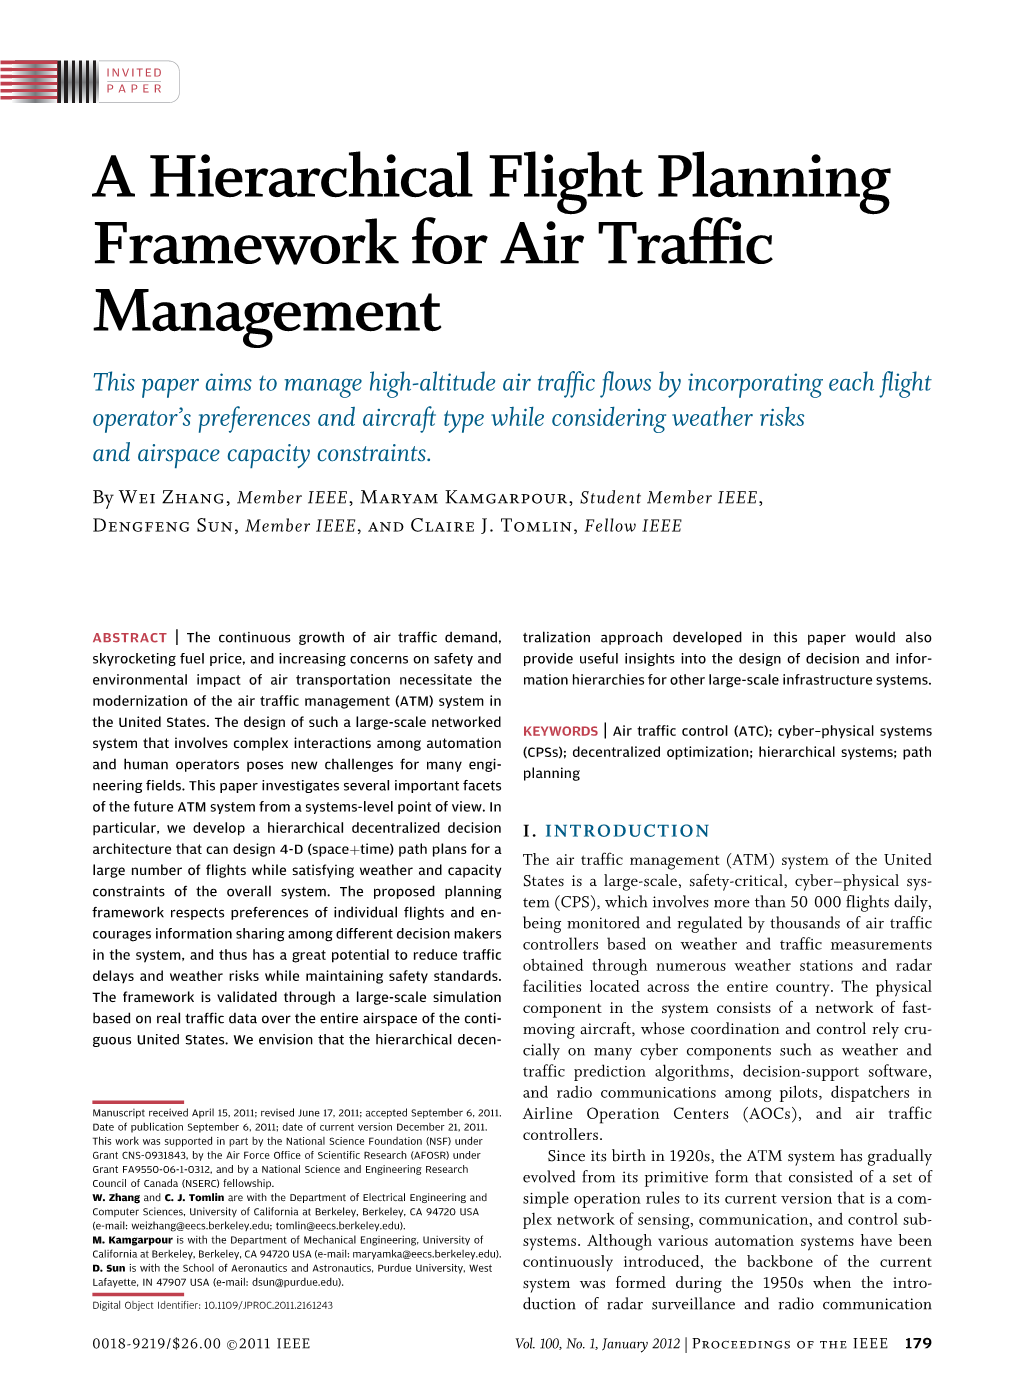 A Hierarchical Flight Planning Framework for Air Traffic Management